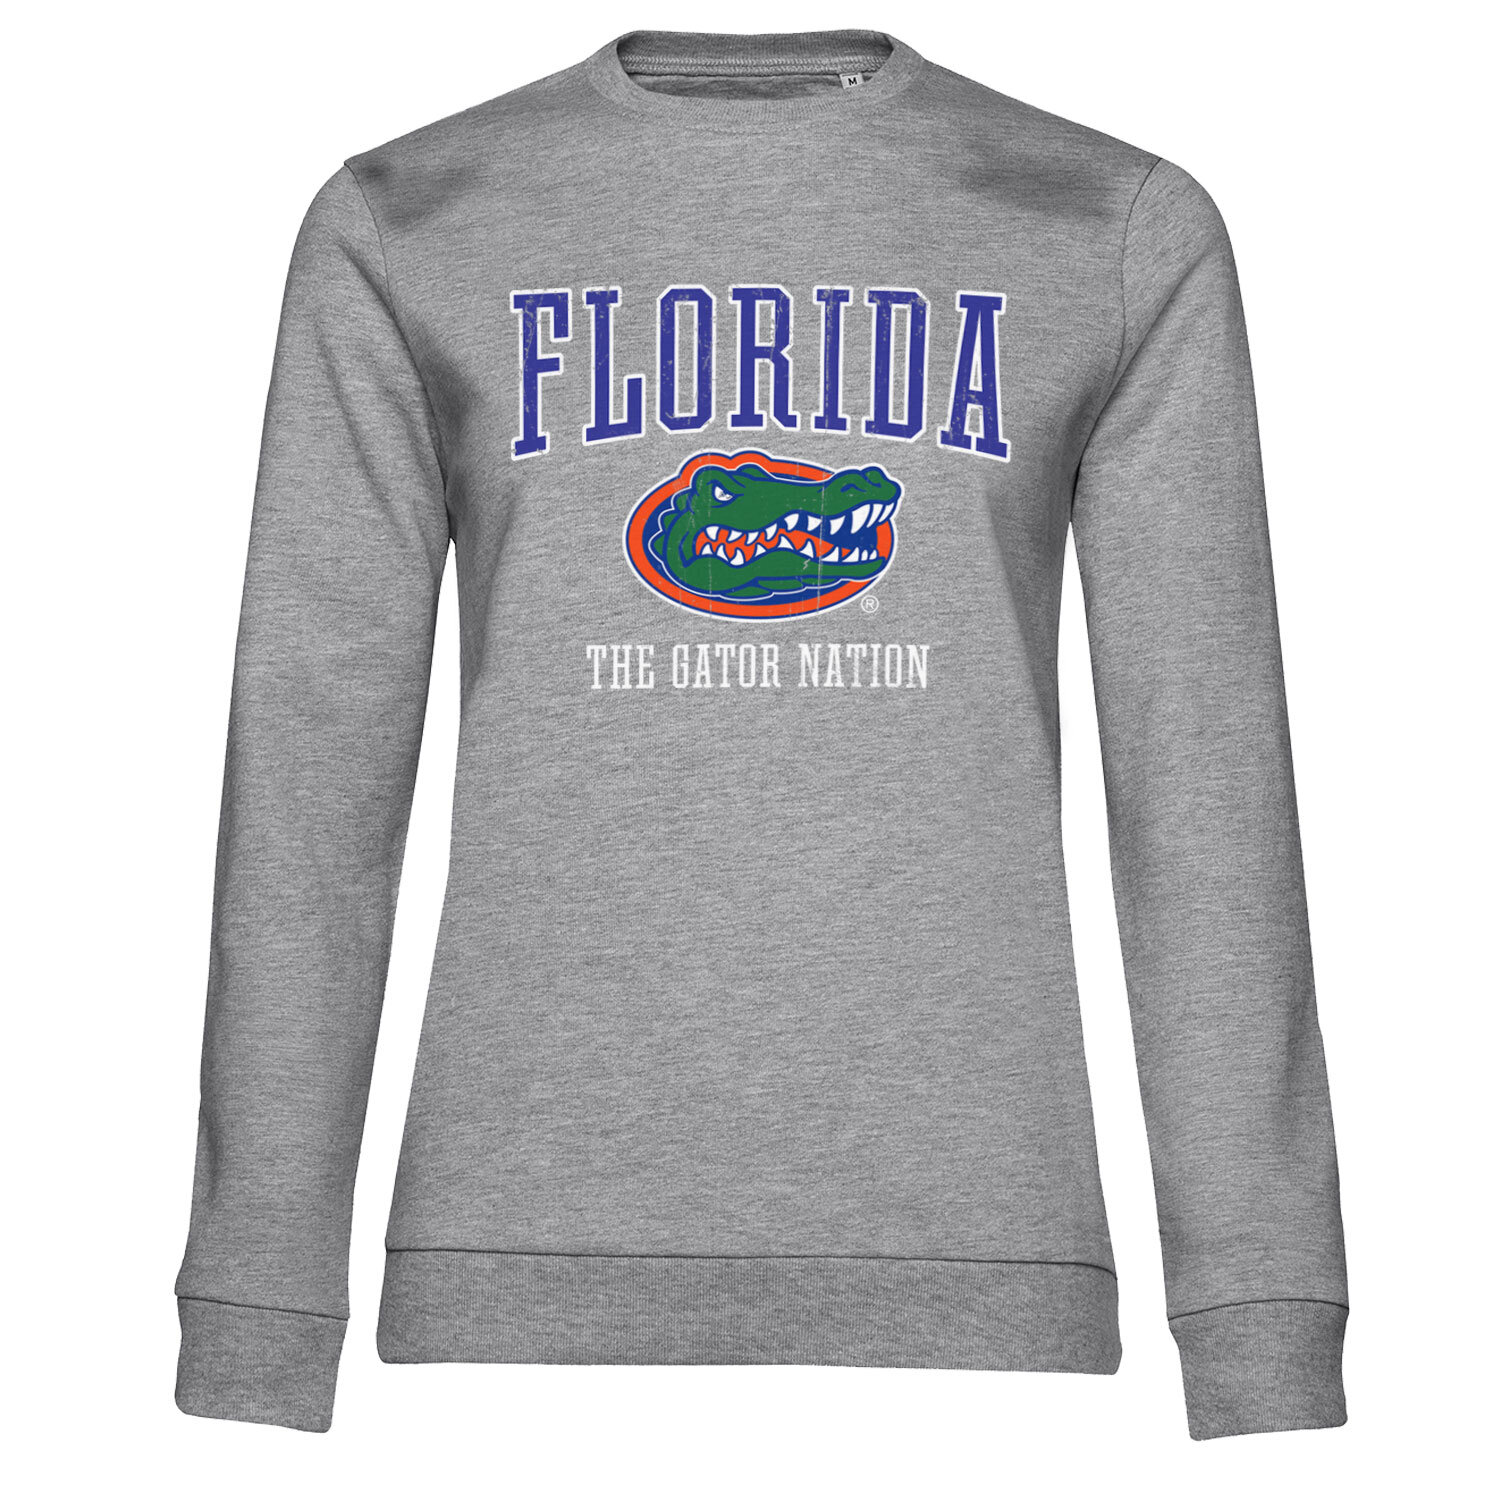 Florida - The Gator Nation Girly Sweatshirt